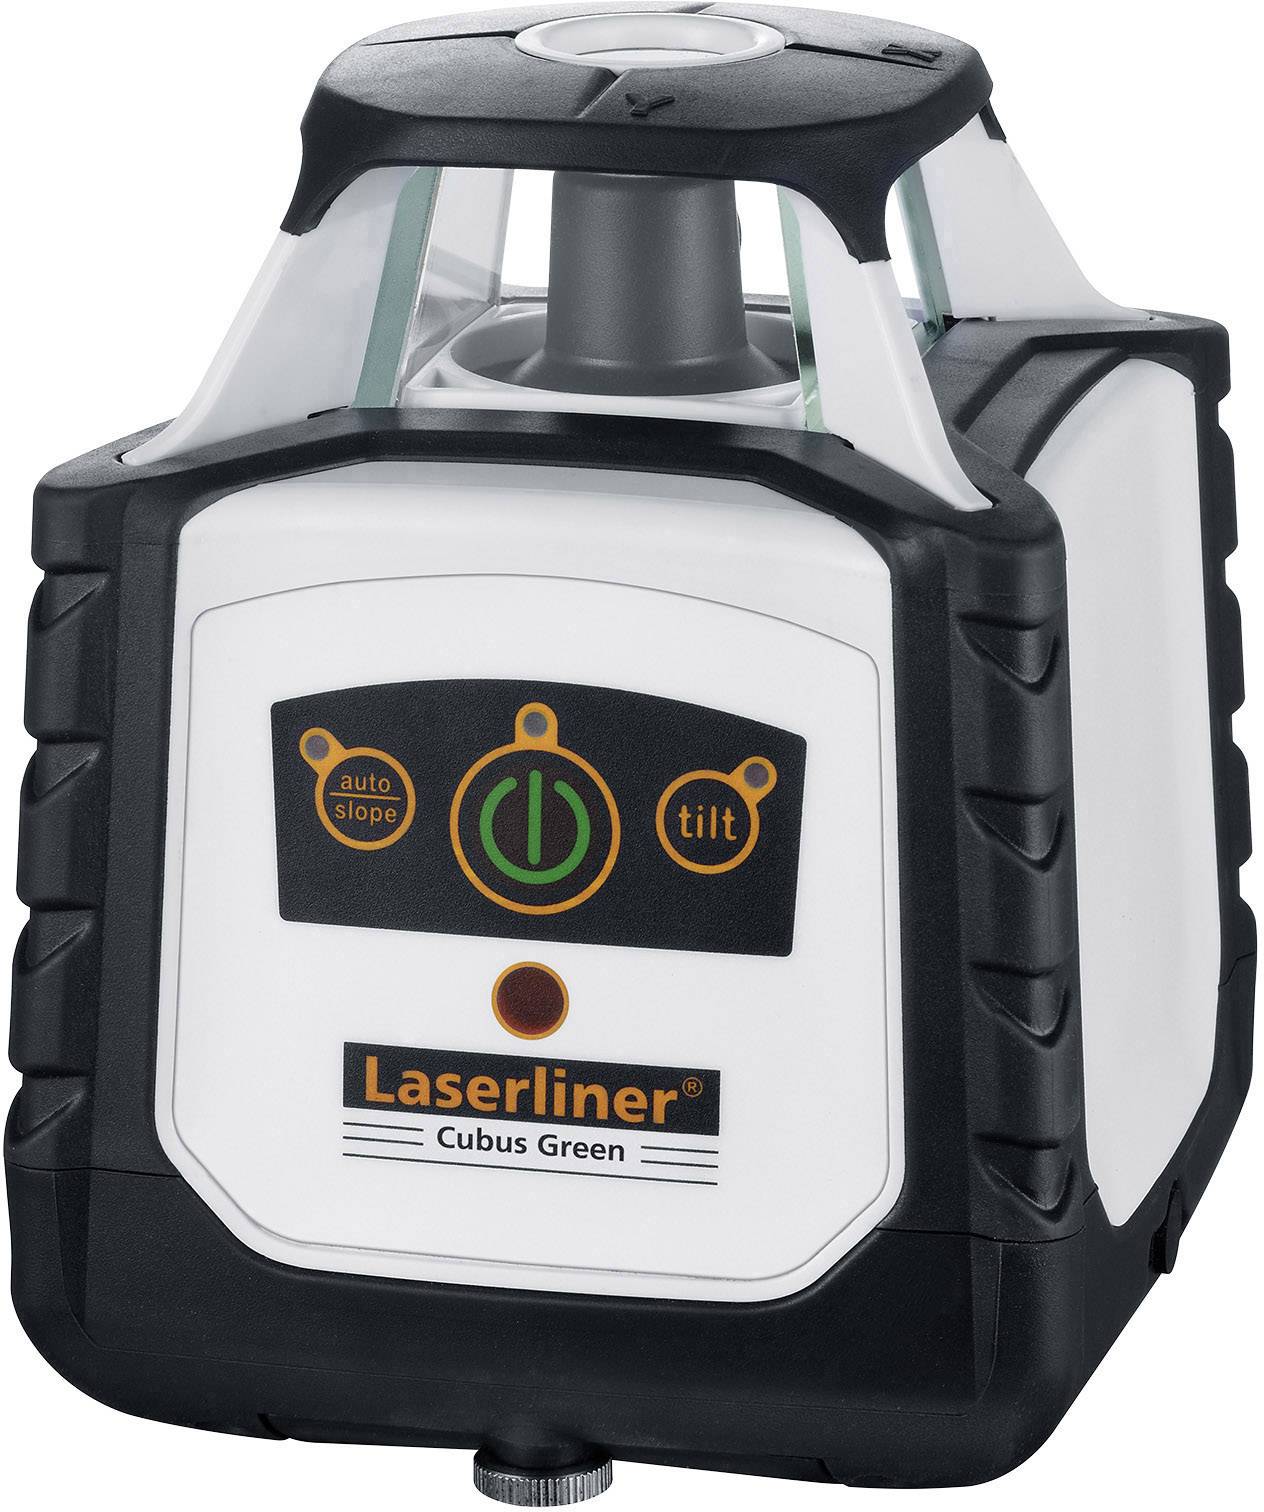 LASERLINER Rotationslaser inkl. Laserempfänger, selbstnivellierend Laserliner Cubus Green 110 Reichw